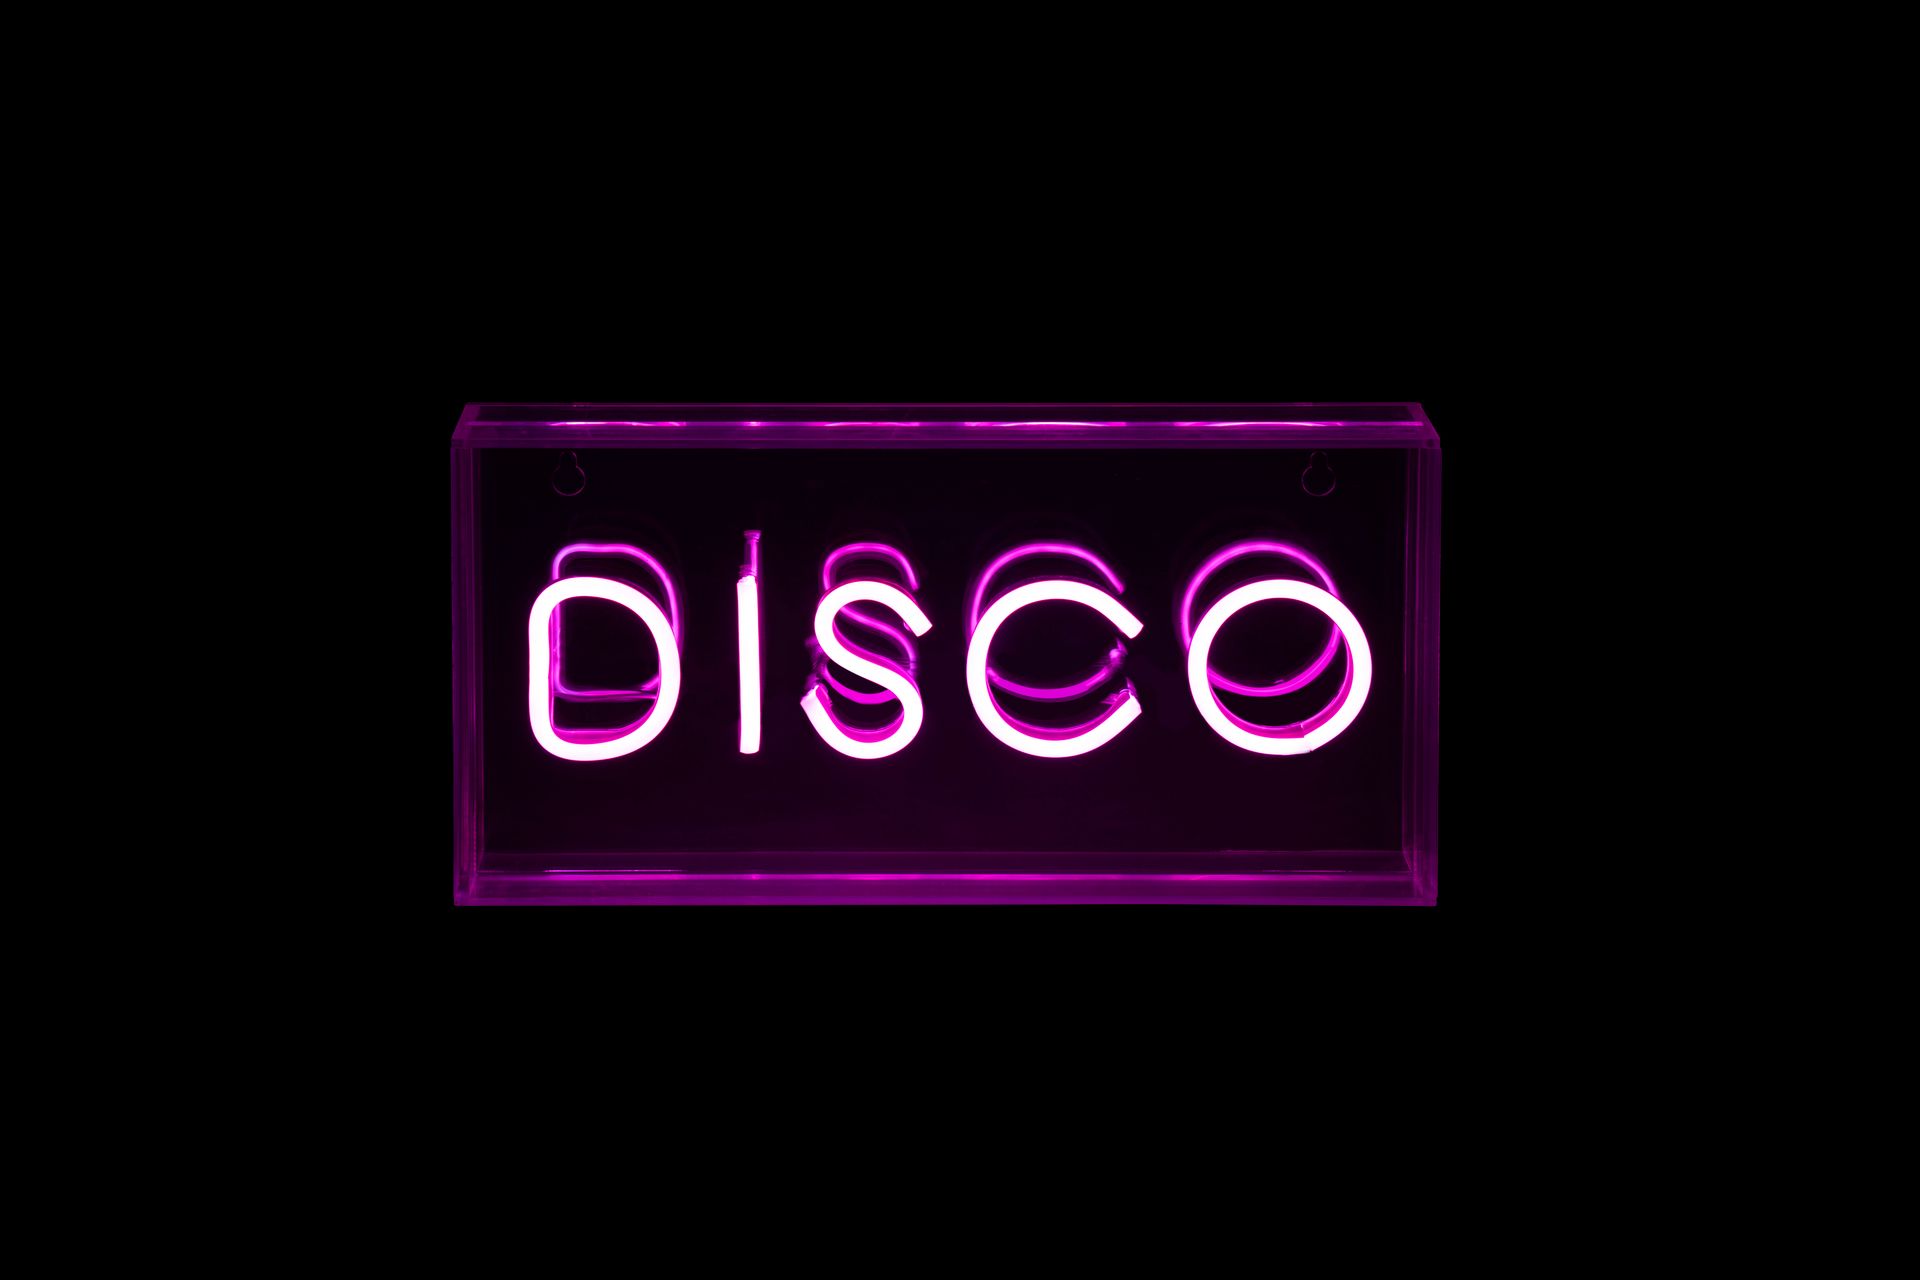 DISCO - Neon Acrylic Light Box